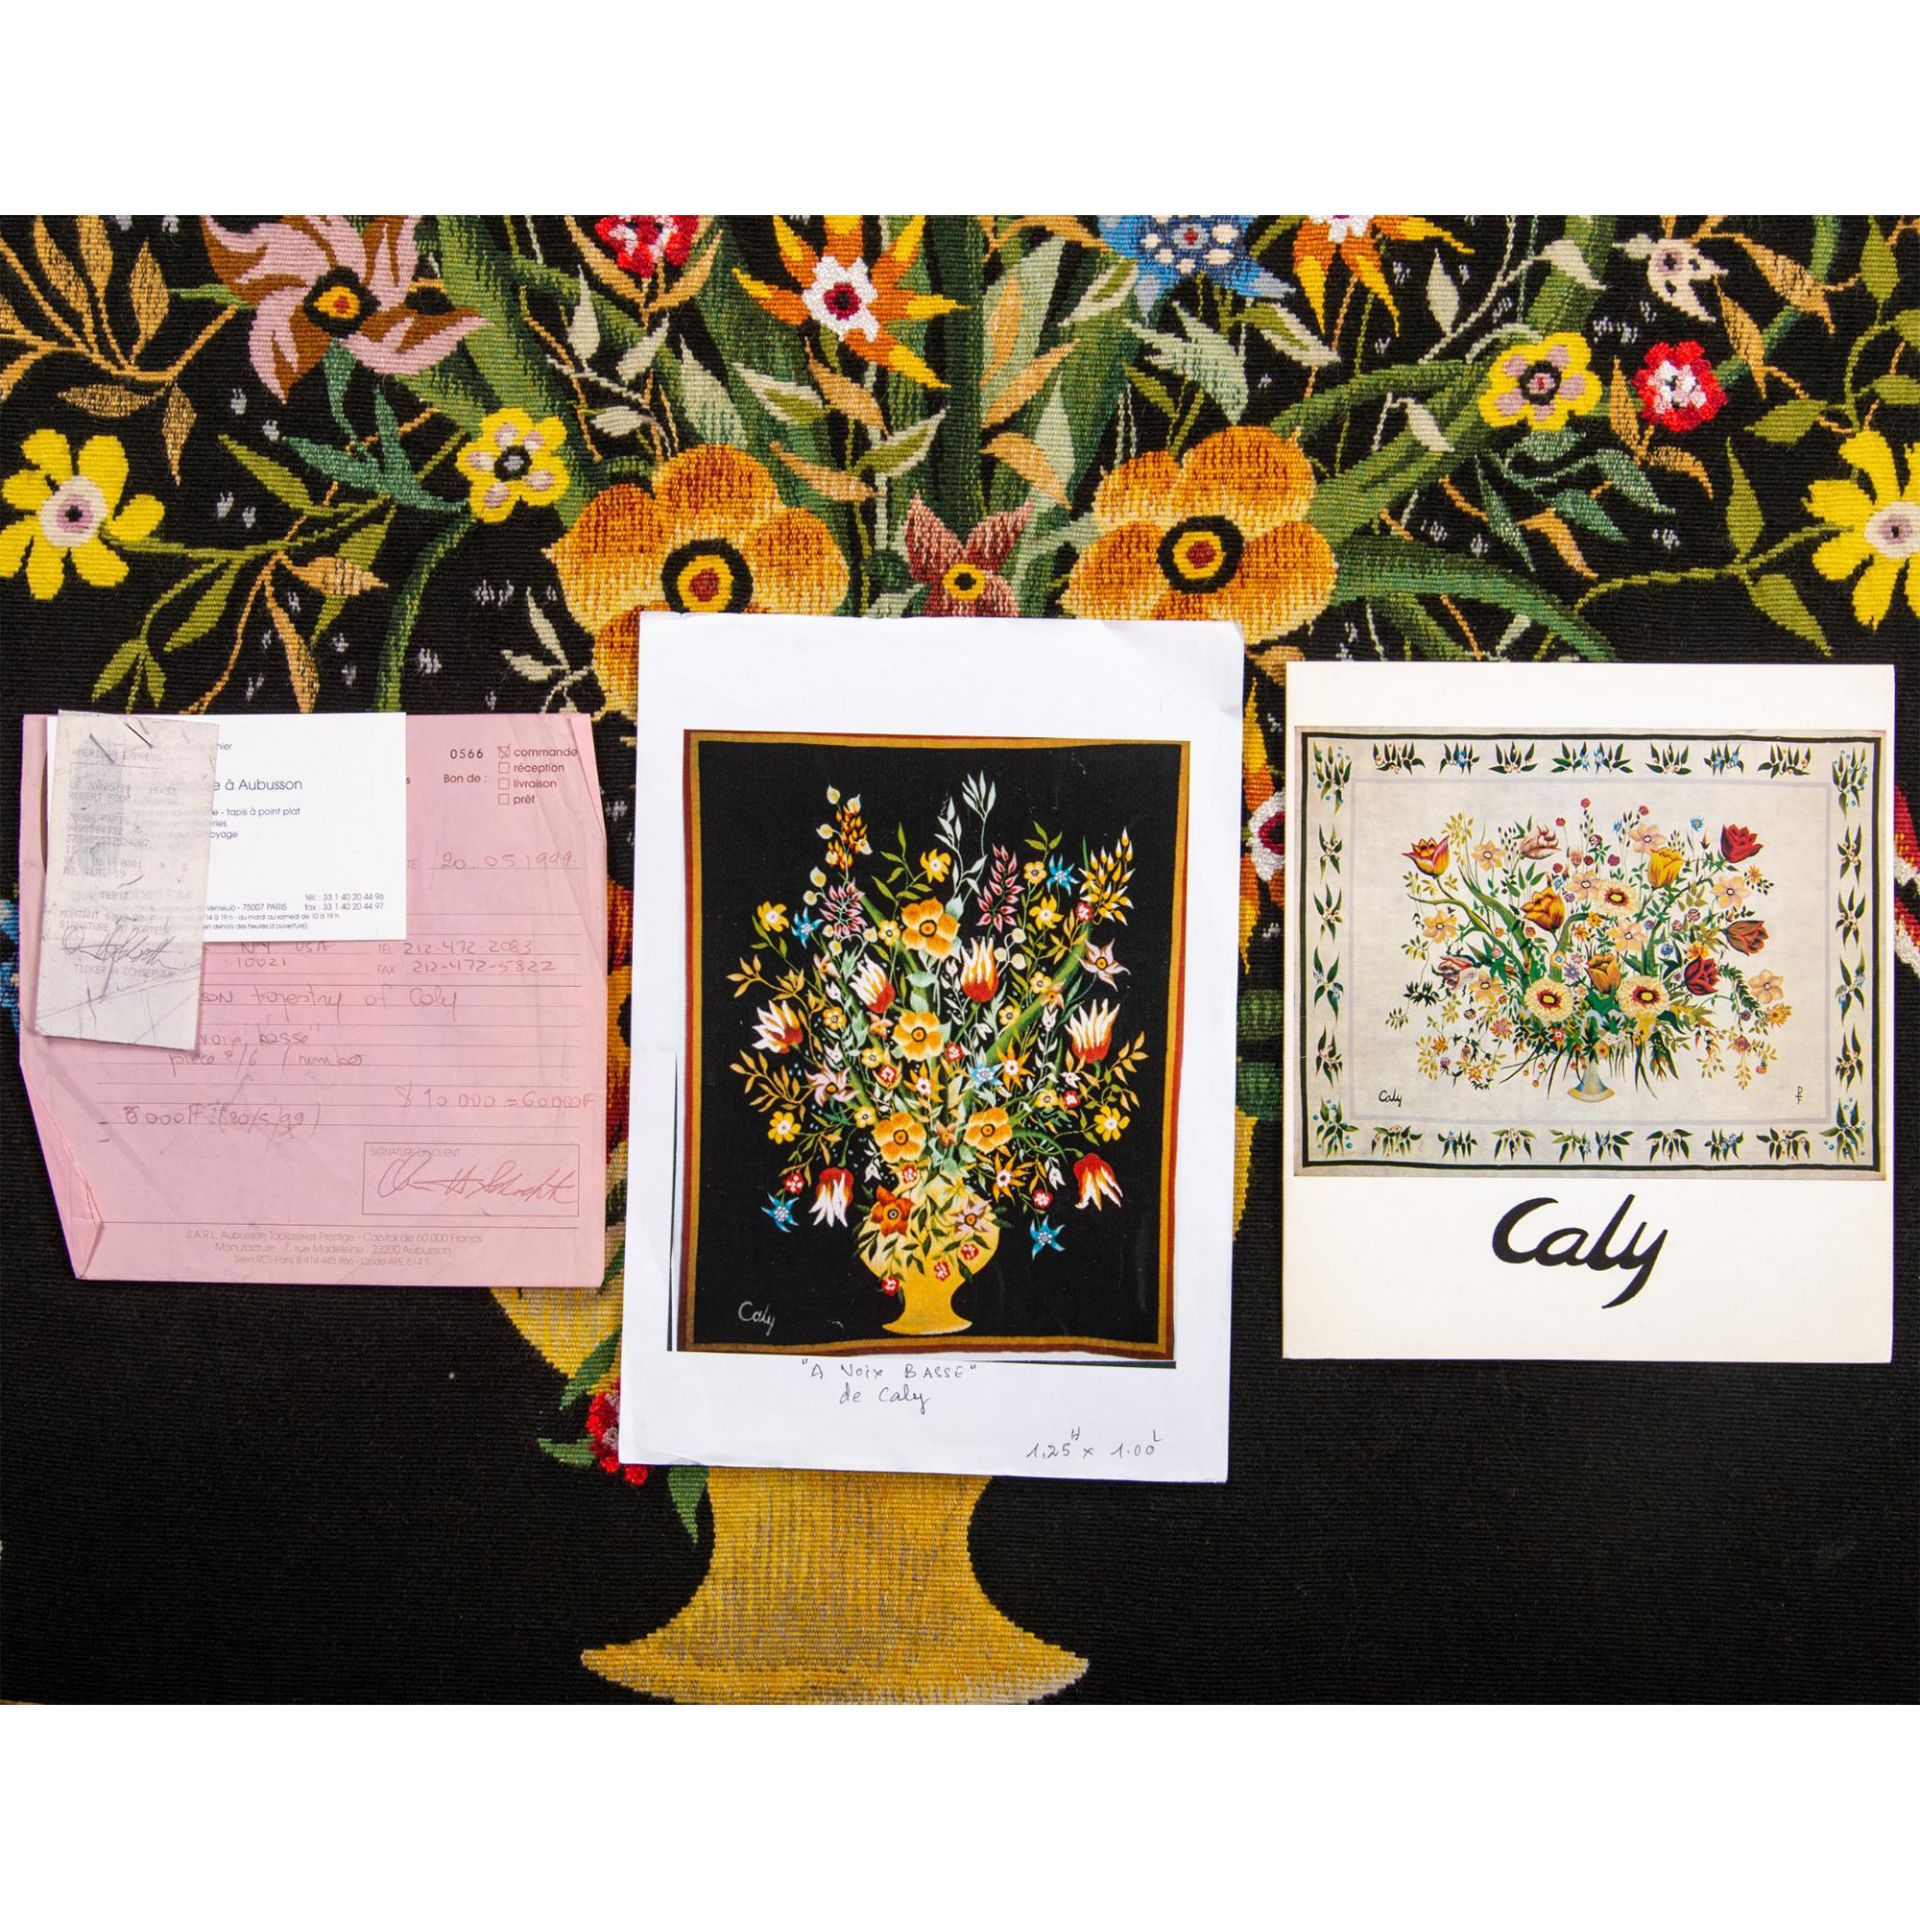 Caly Odette Aubusson Tapestry, A Voix Basse - Bild 6 aus 11